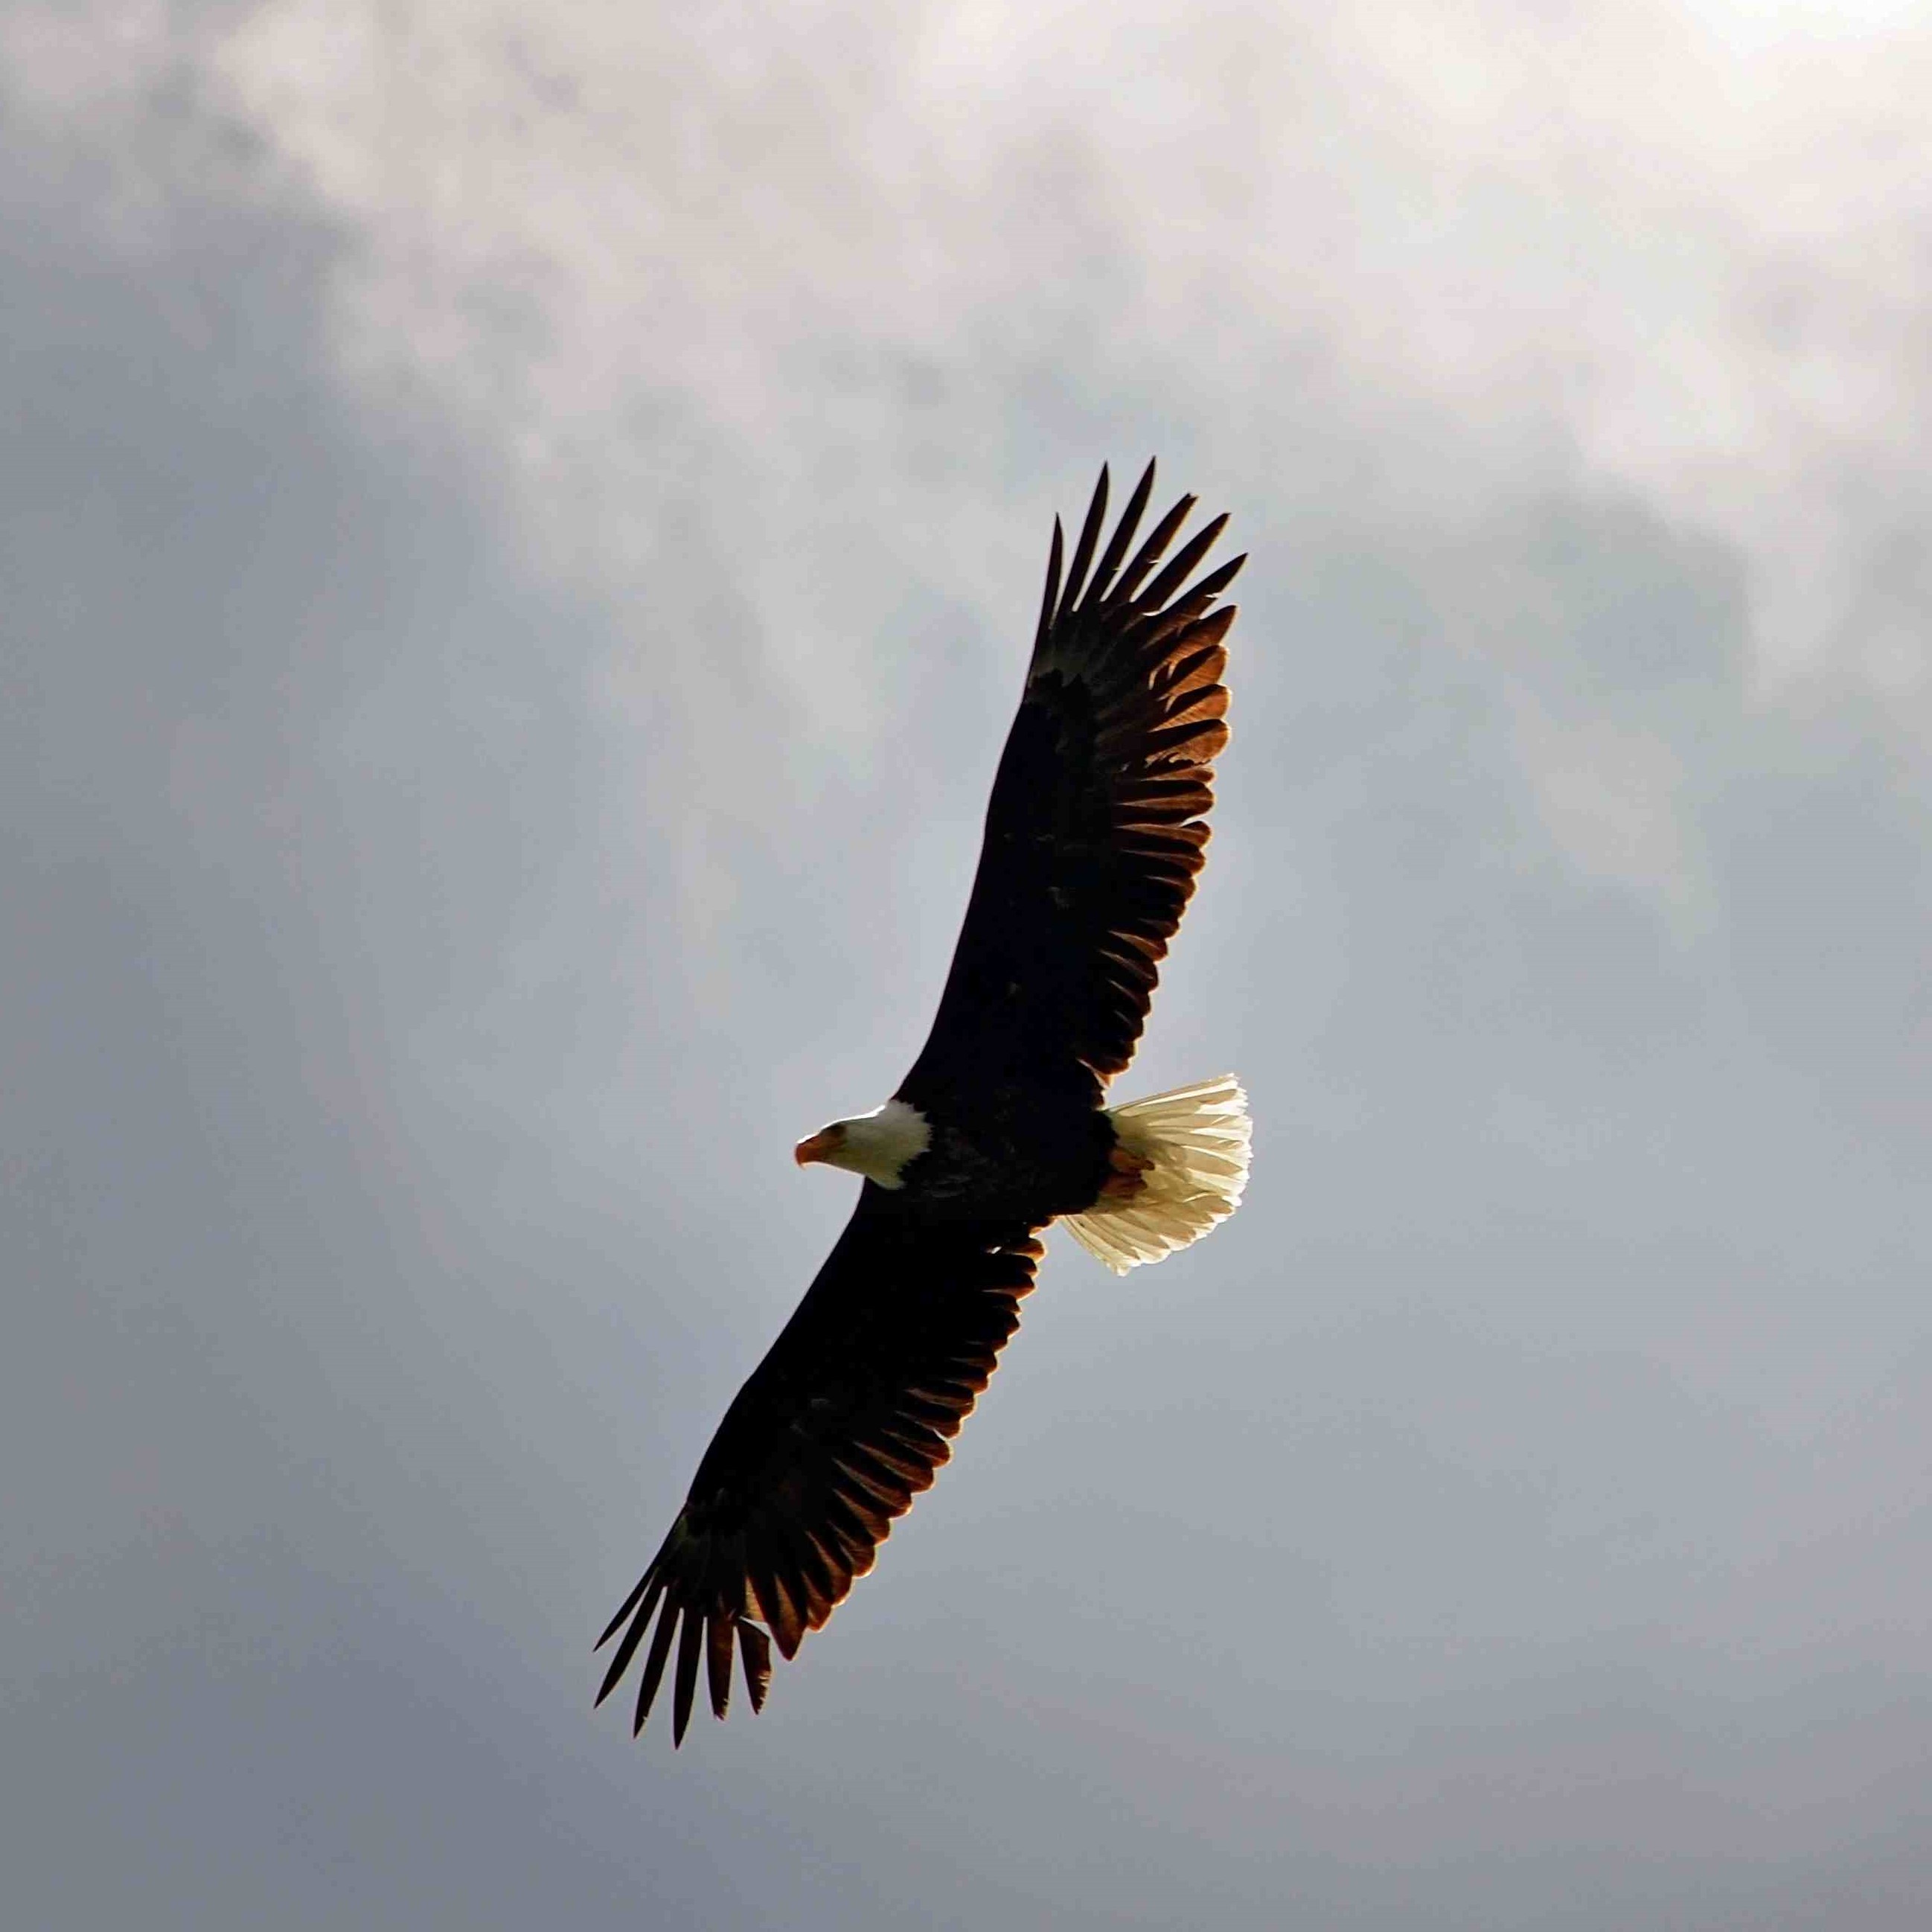 bald-eagle-soaring-over-maligne-lake-in-the-rocky-2022-11-02-16-46-24-utc